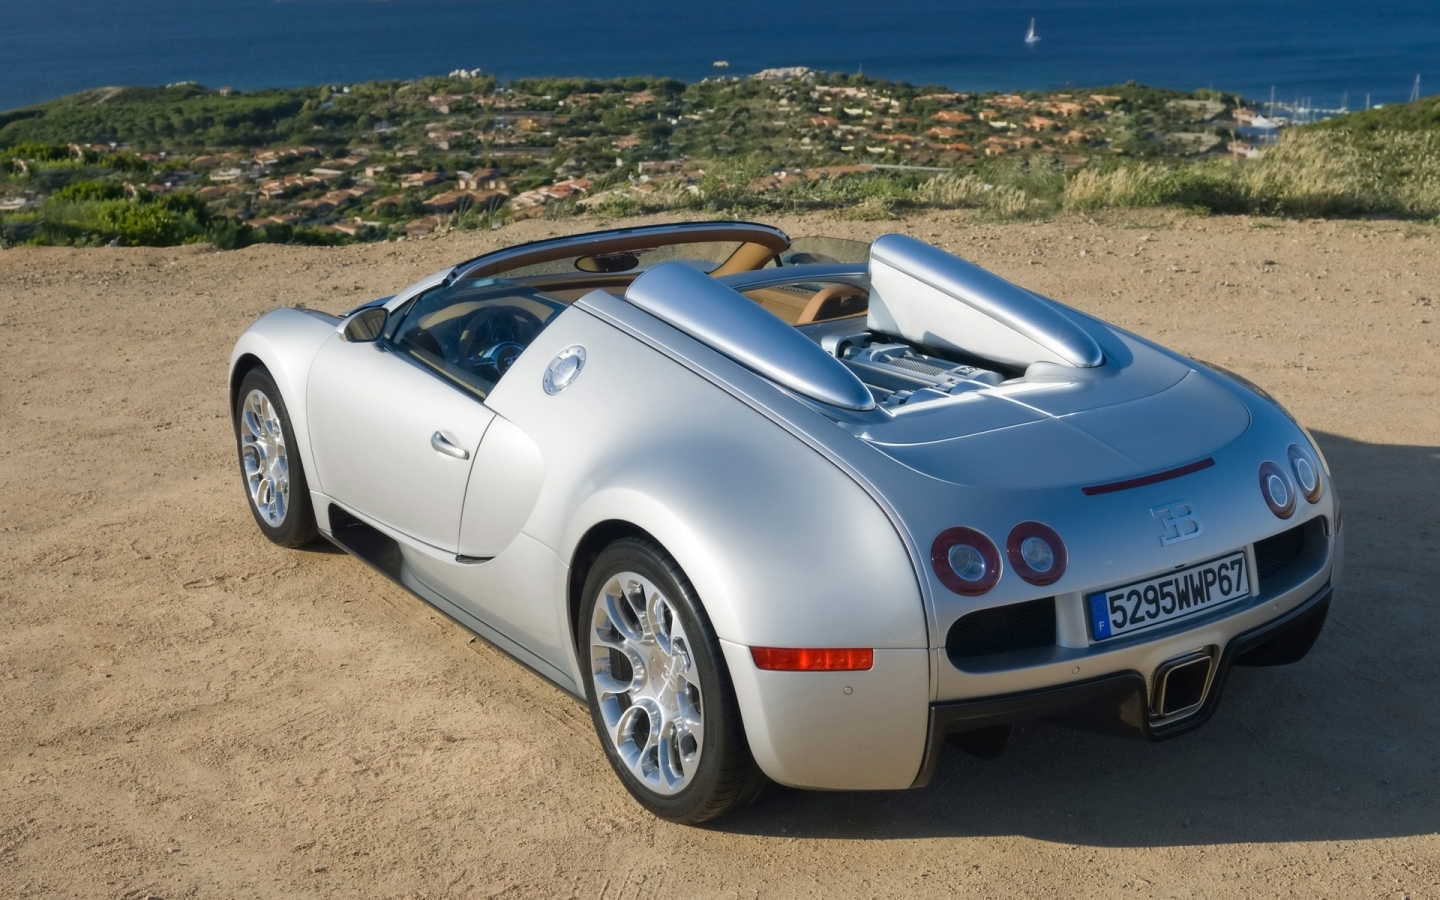 Bugatti Veyron 16.4 Grand Sport in Sardinia 2010 - Rear Angle for 1440 x 900 widescreen resolution